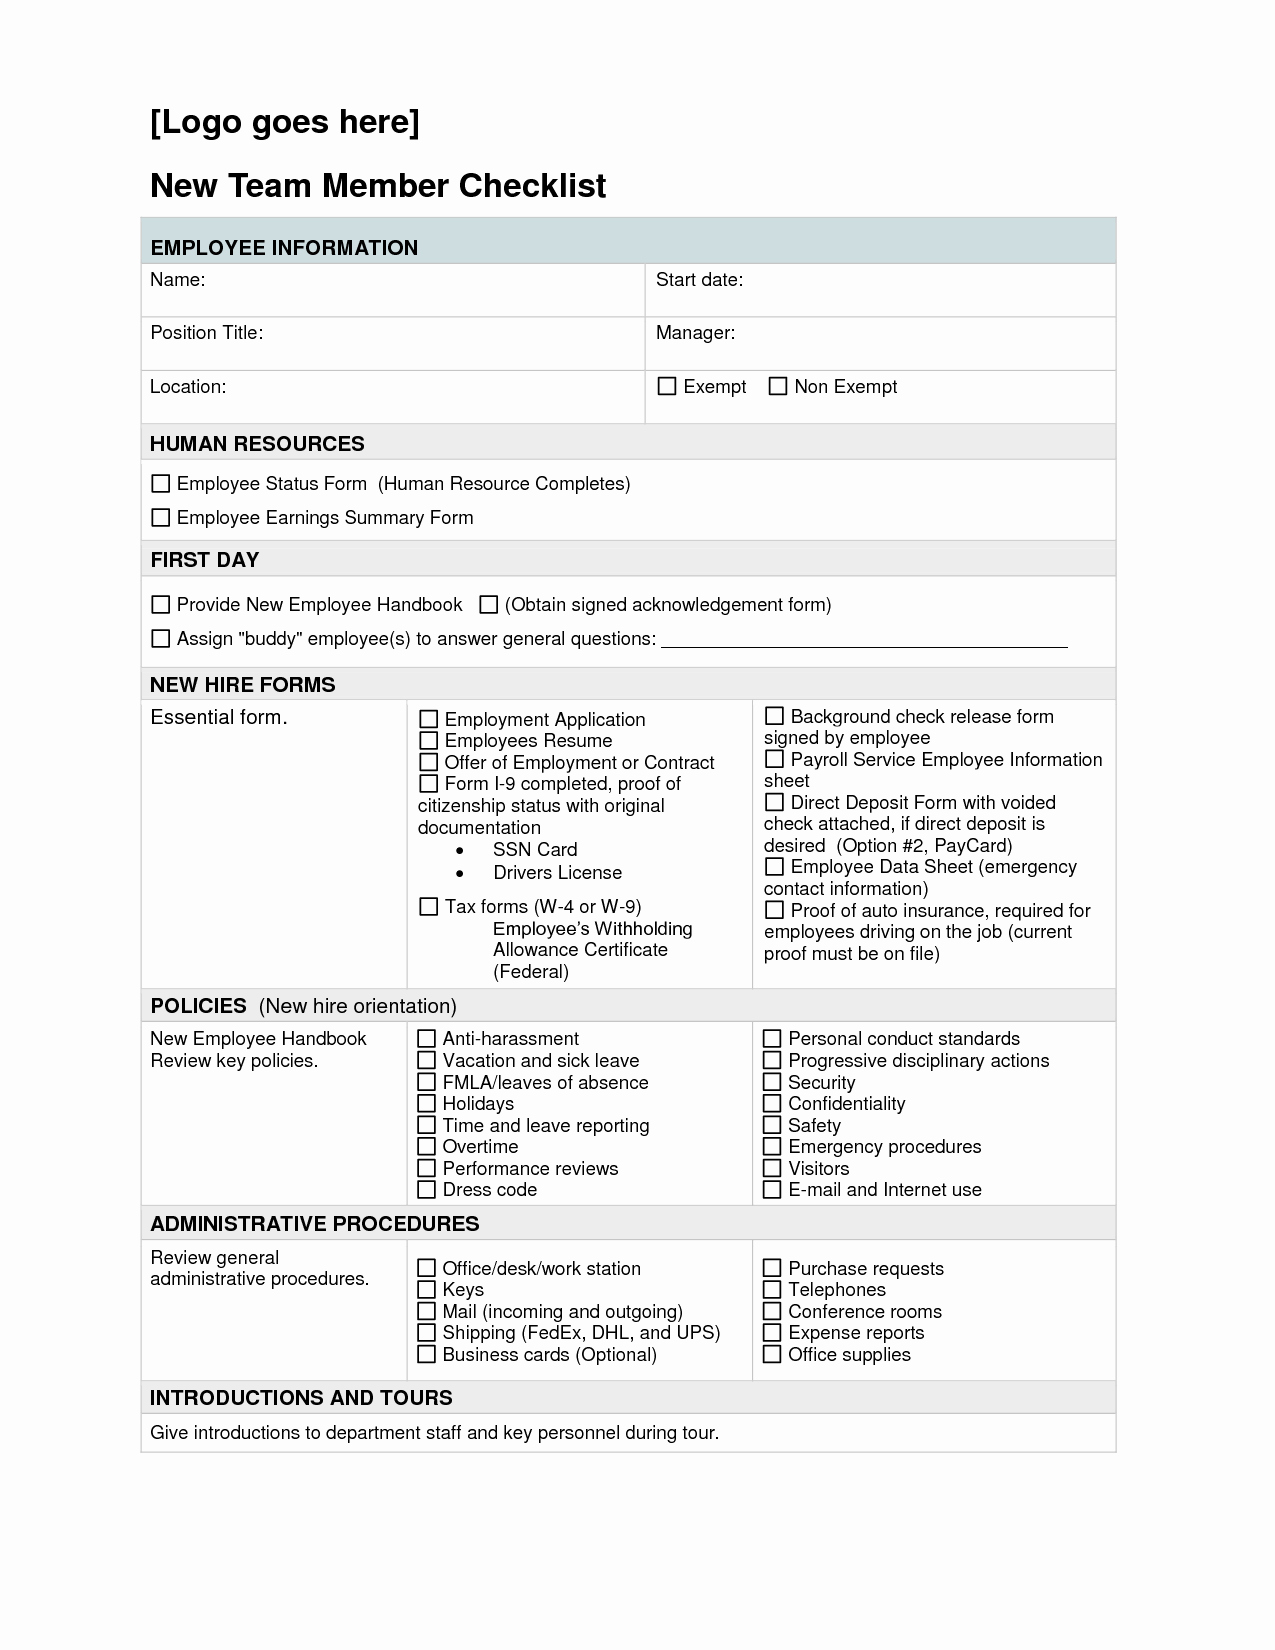 New Employee orientation Template Fresh New Hire Checklist Full Version